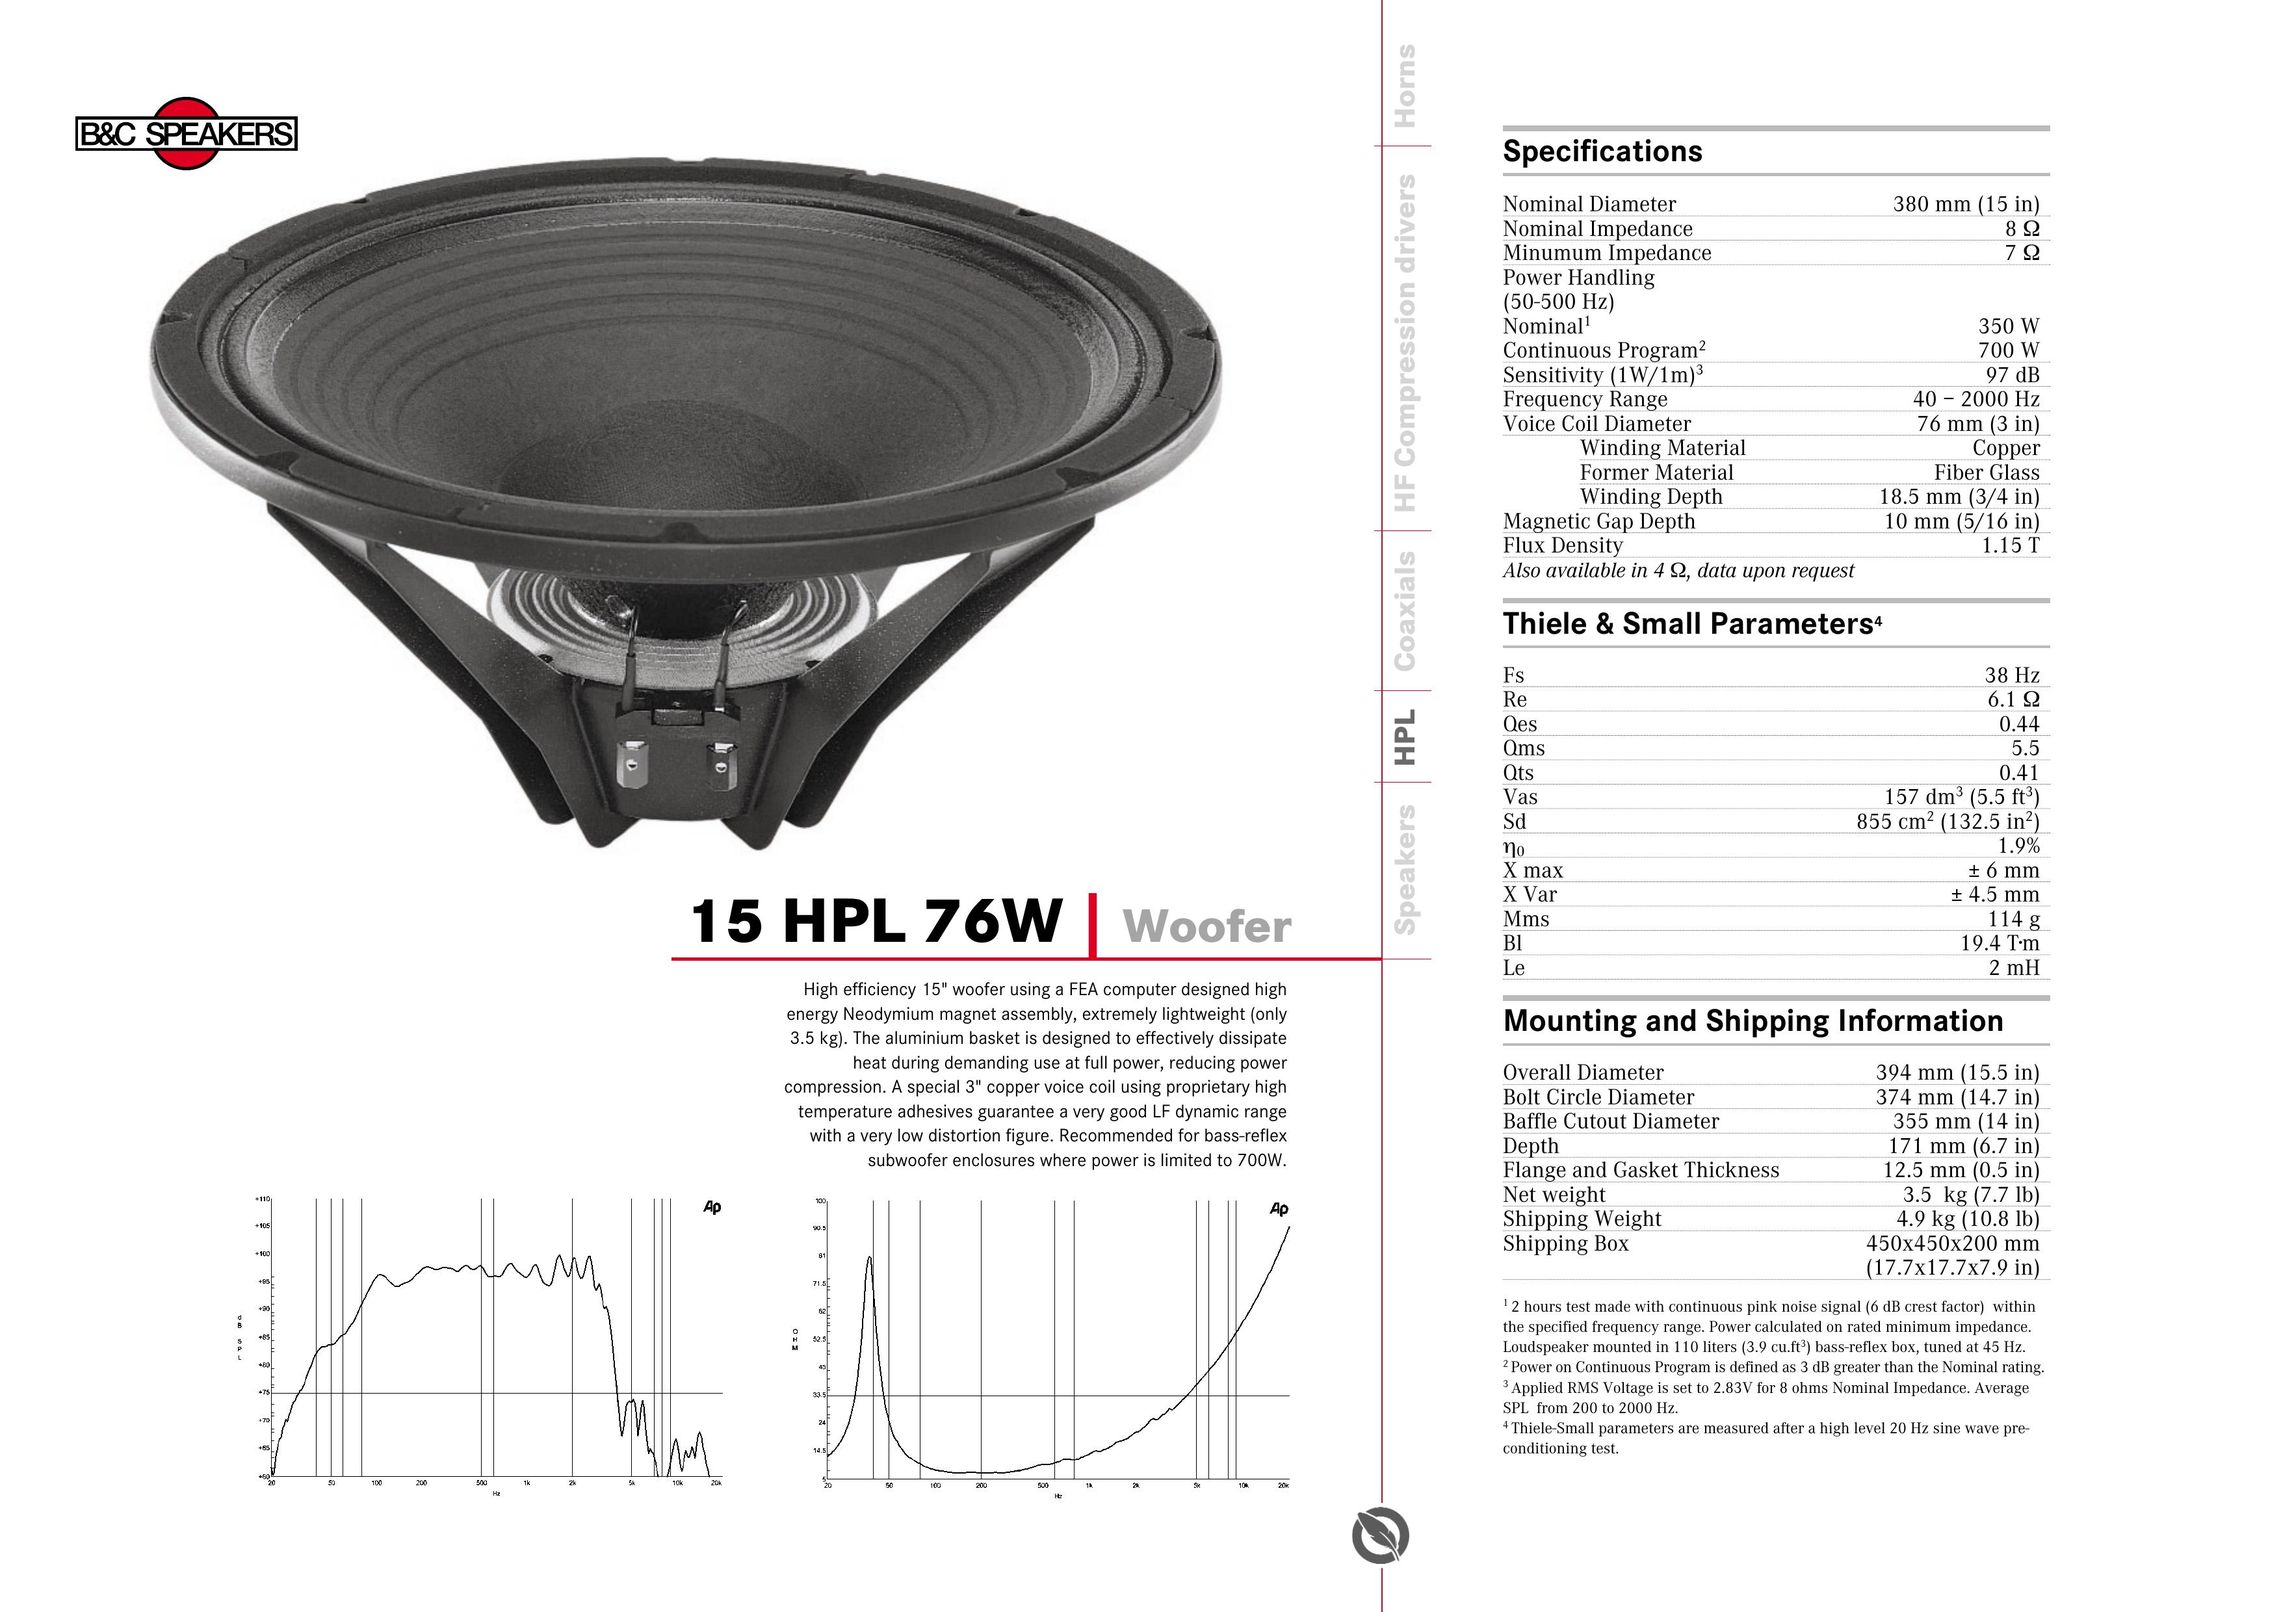 B&C Speakers 15 HPL 76W Speaker User Manual